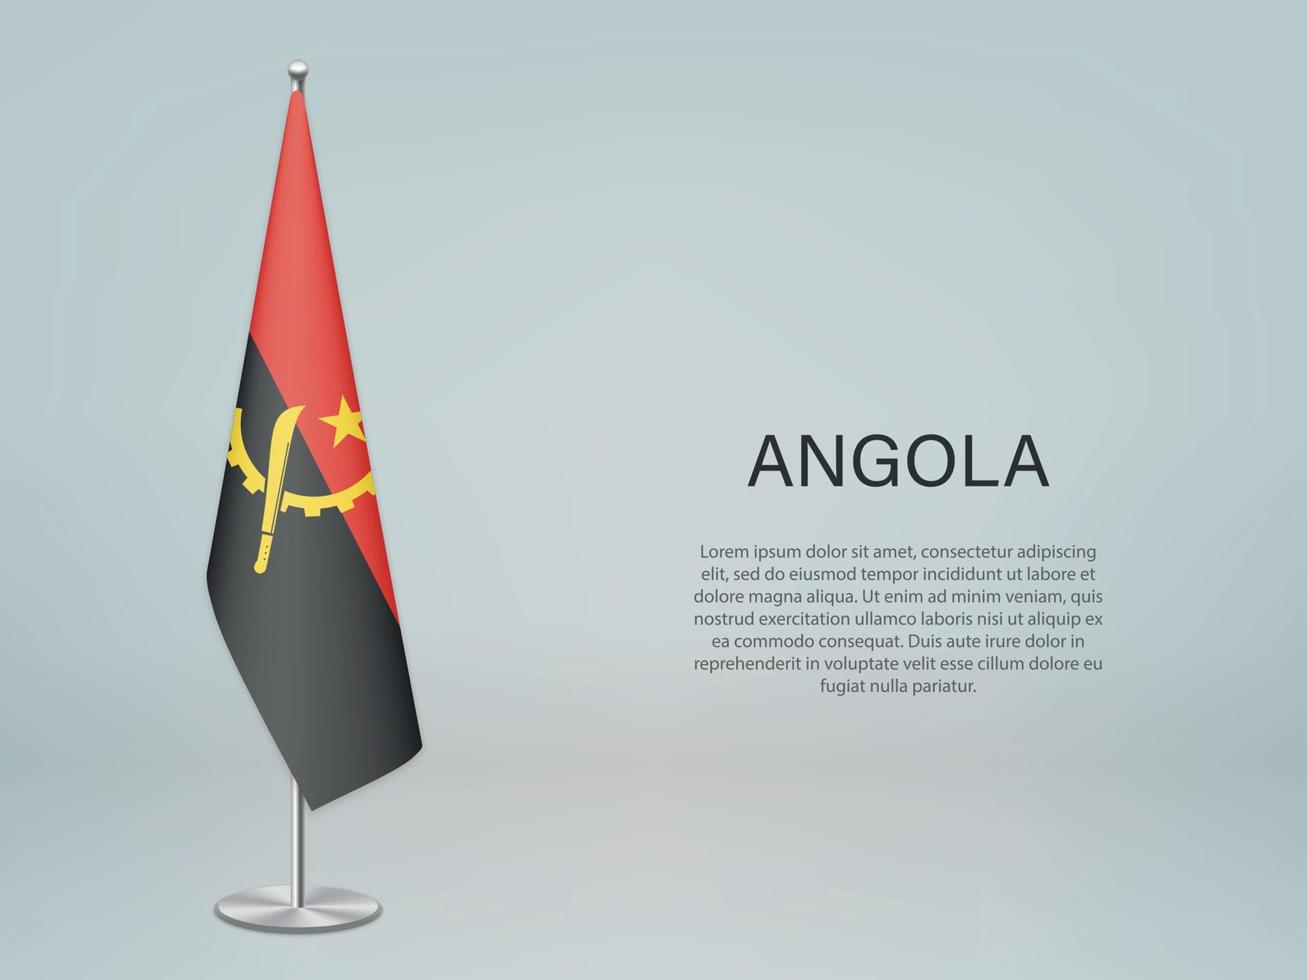 angola pendurada bandeira no stand. modelo de banner de conferência vetor